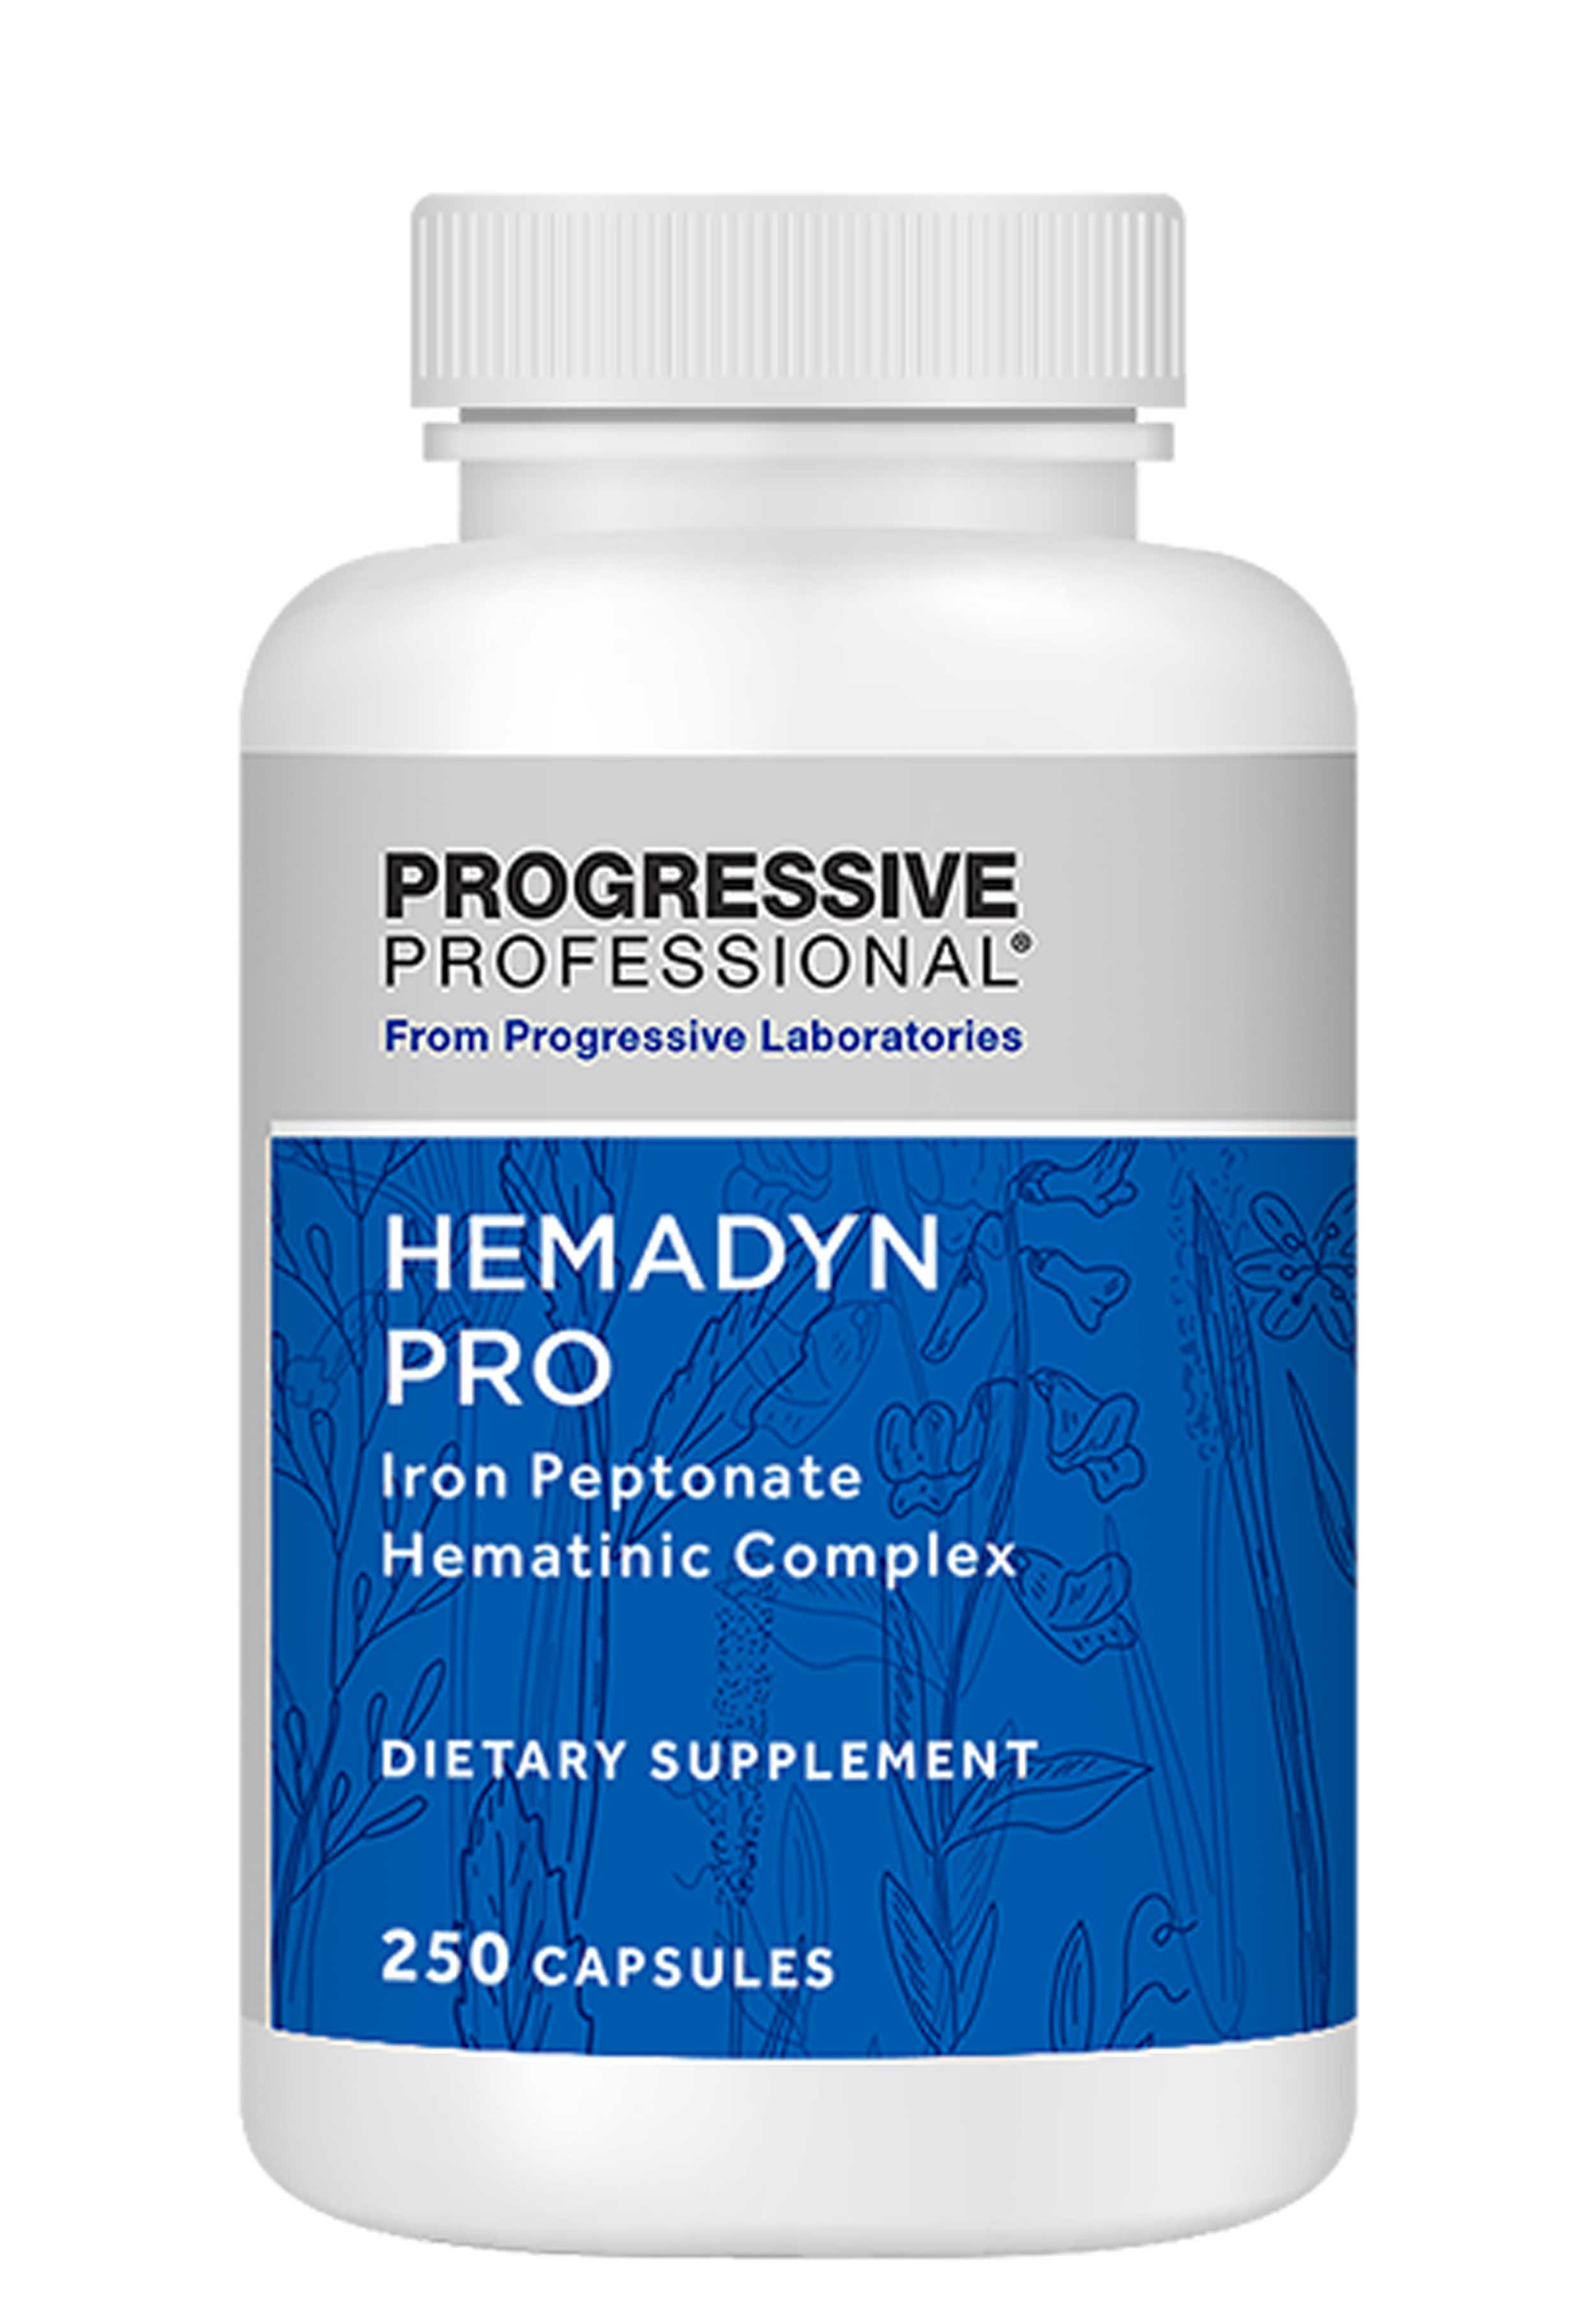 Progressive Laboratories Hemadyn Pro